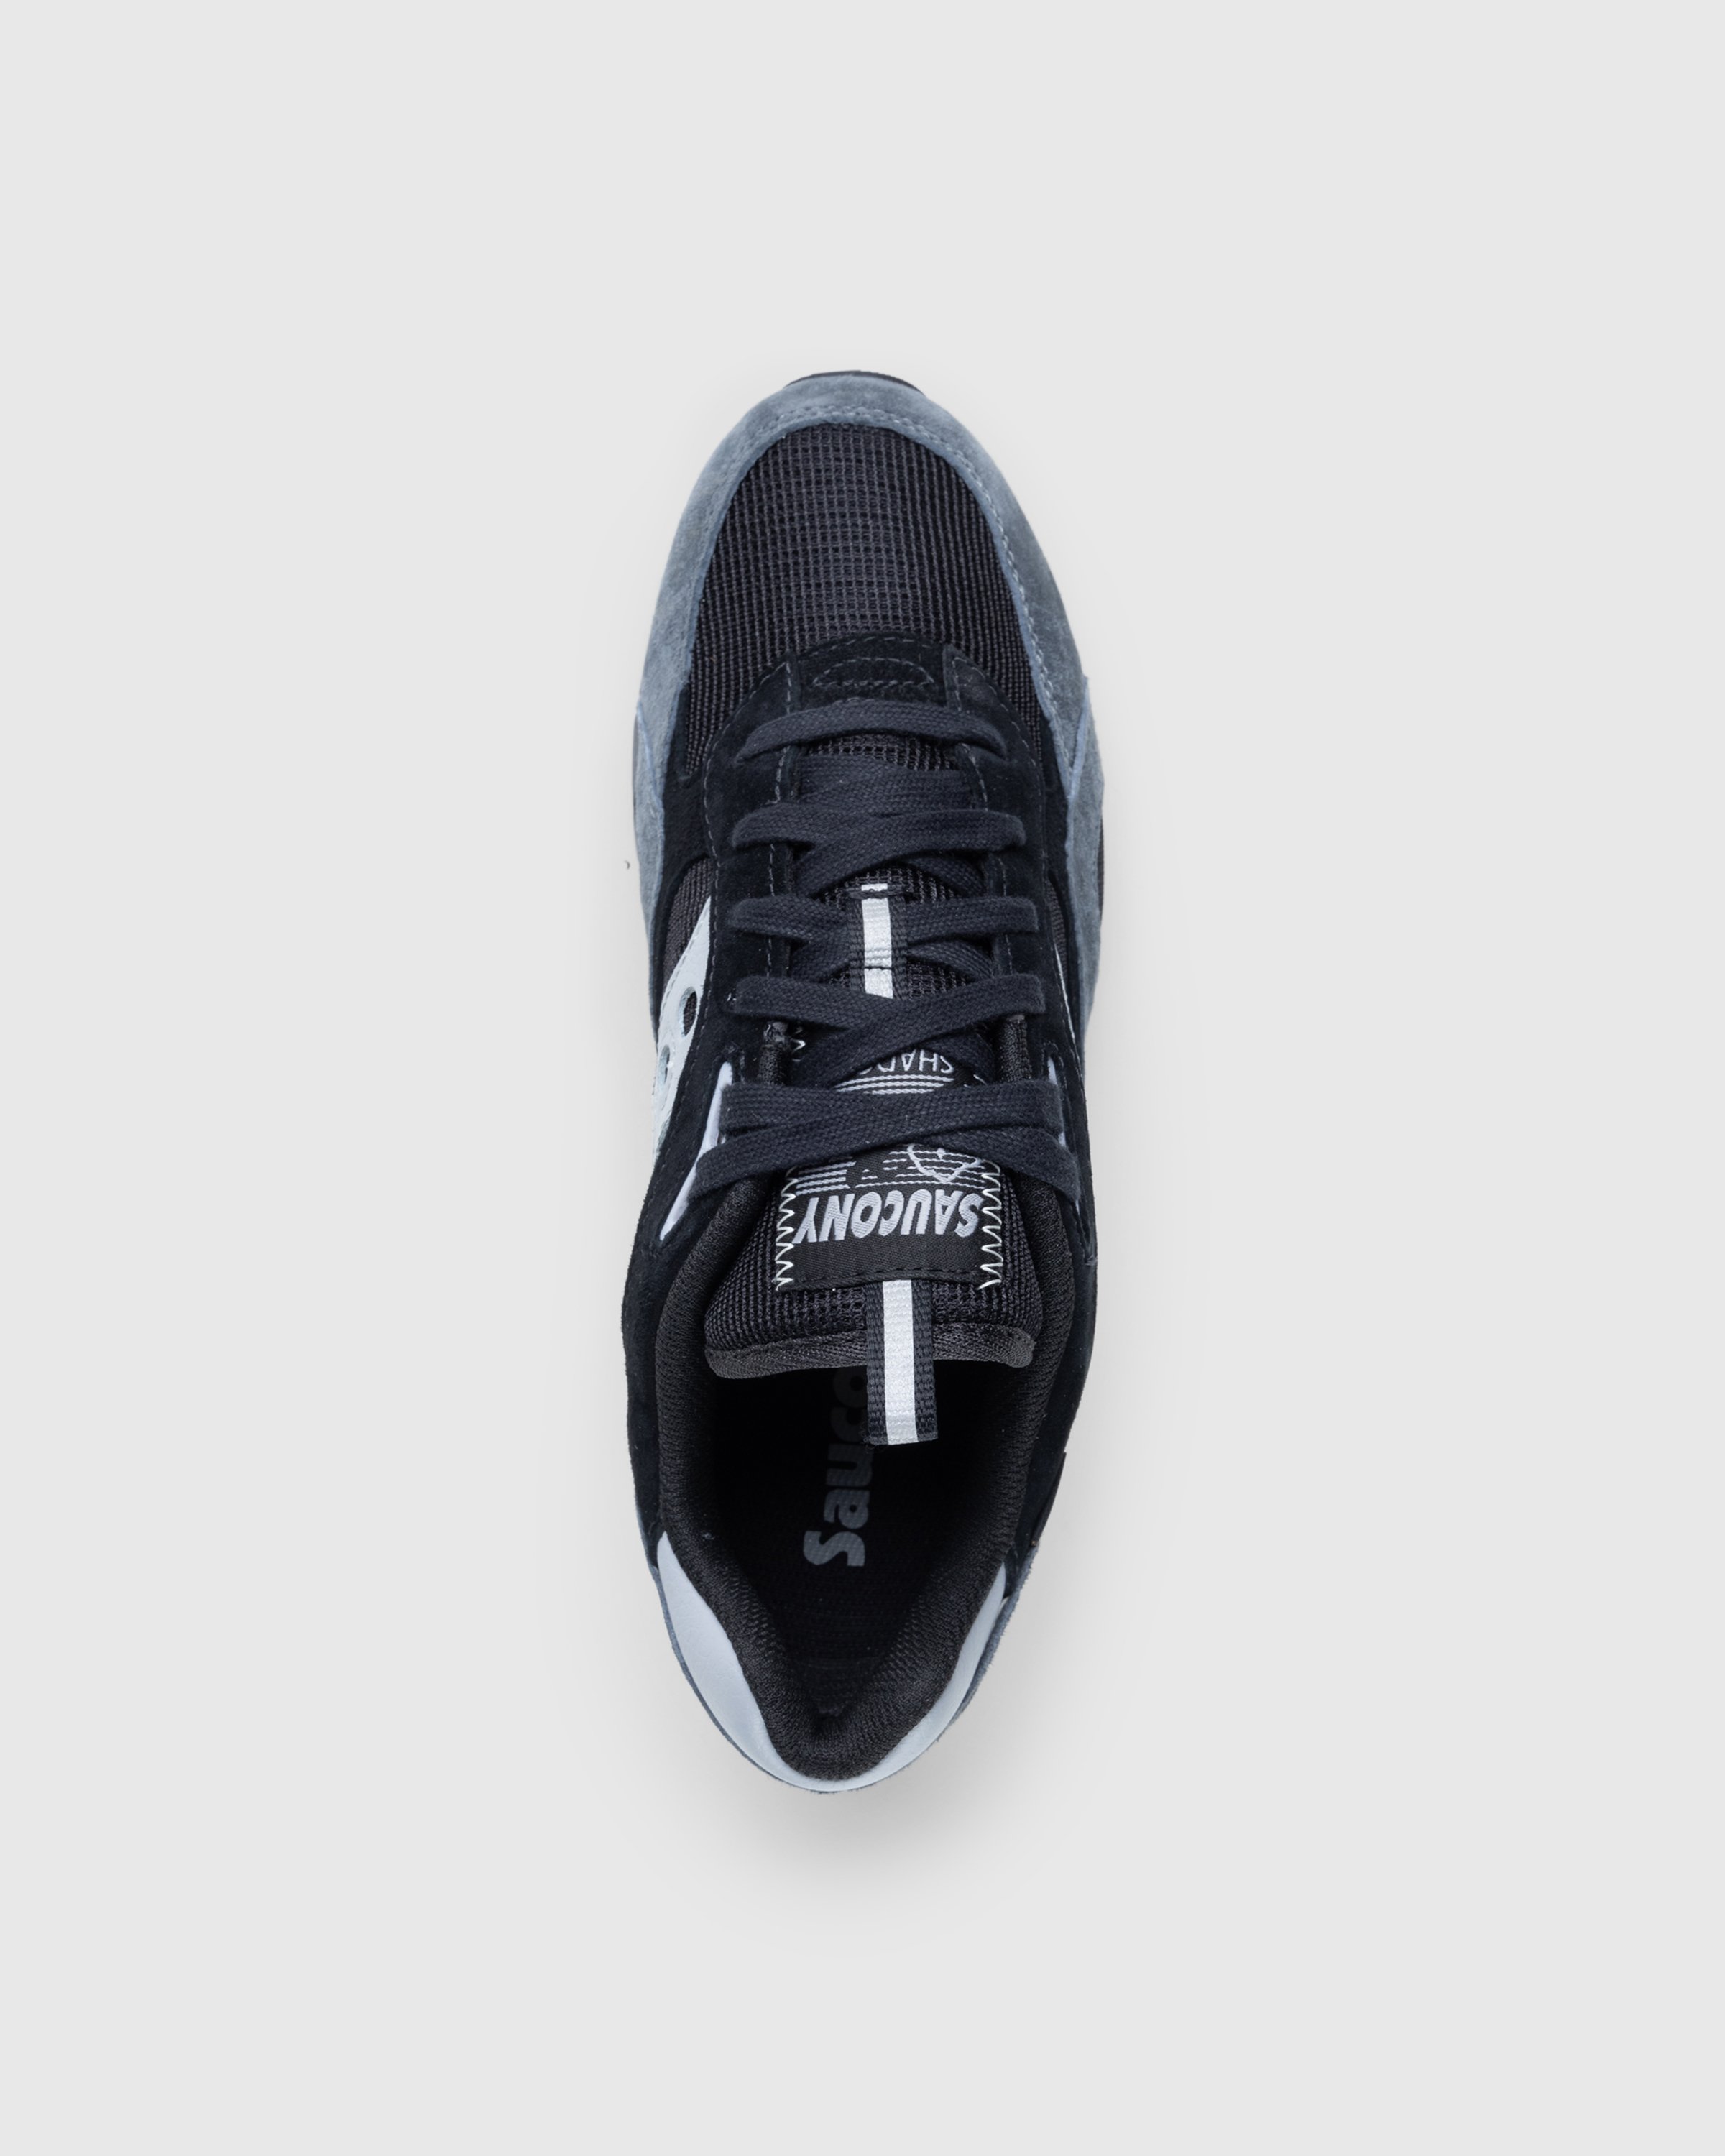 Saucony - Shadow 6000 GTX Black - Footwear - Black - Image 5